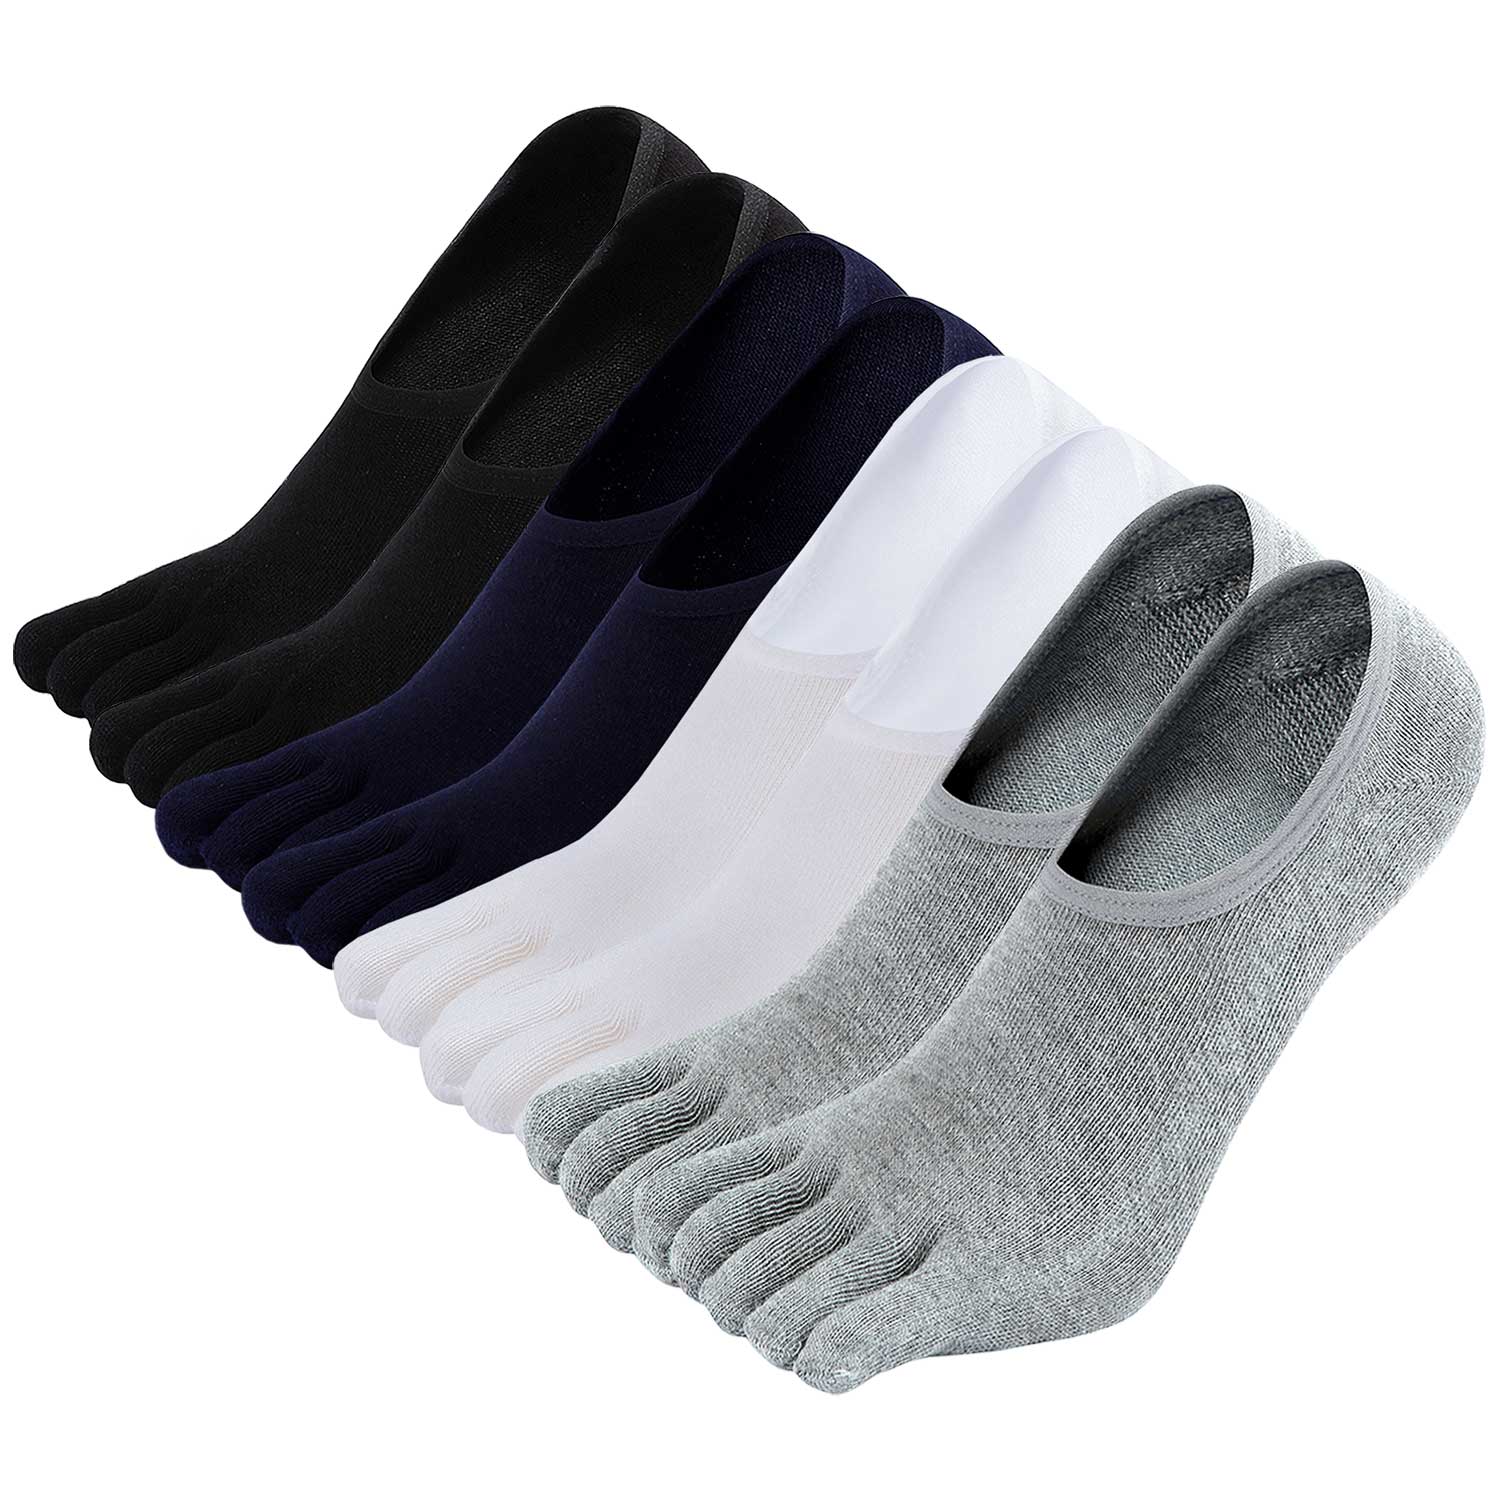 CL90 Men's No Show Socks Shoe Size 6-12 - 6 pairs - White - Grey Toe ...